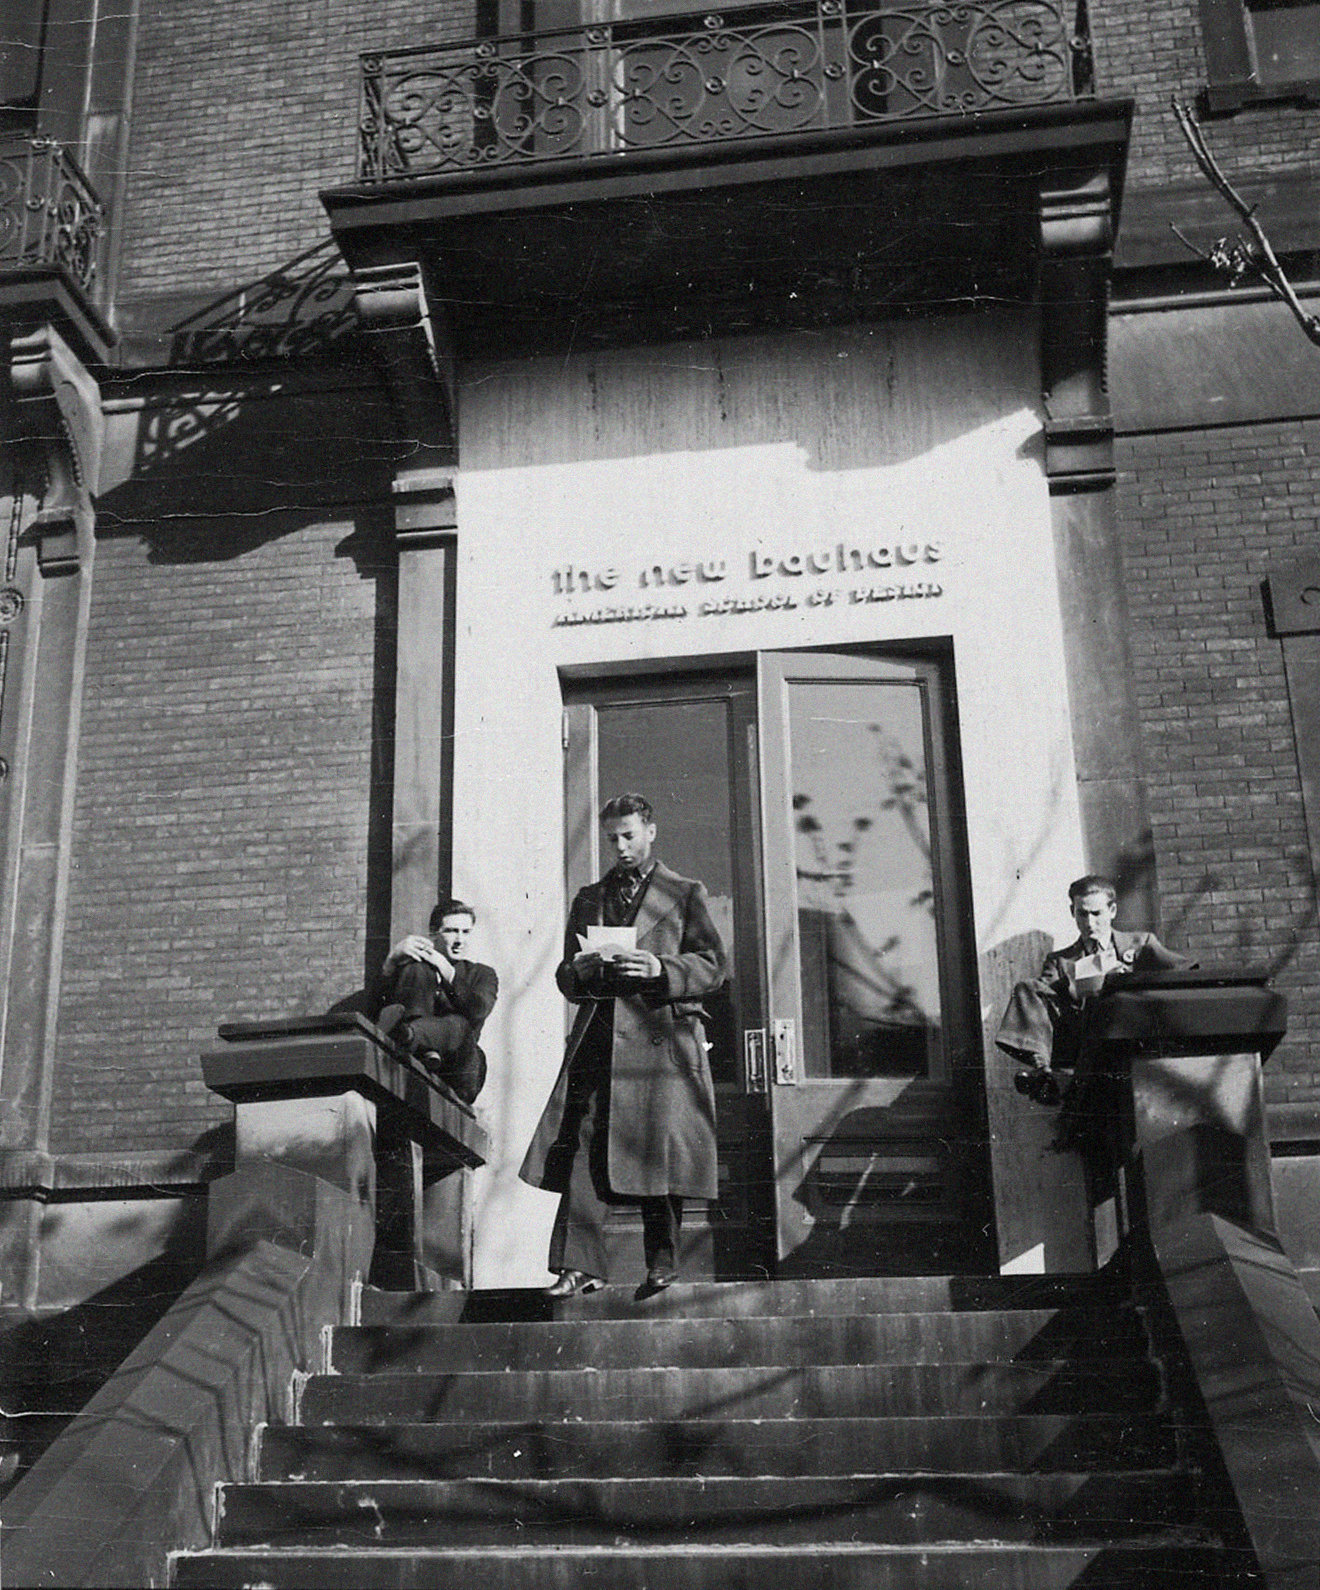 Exterior of The New Bauhaus School of Design in Chicago, 1938